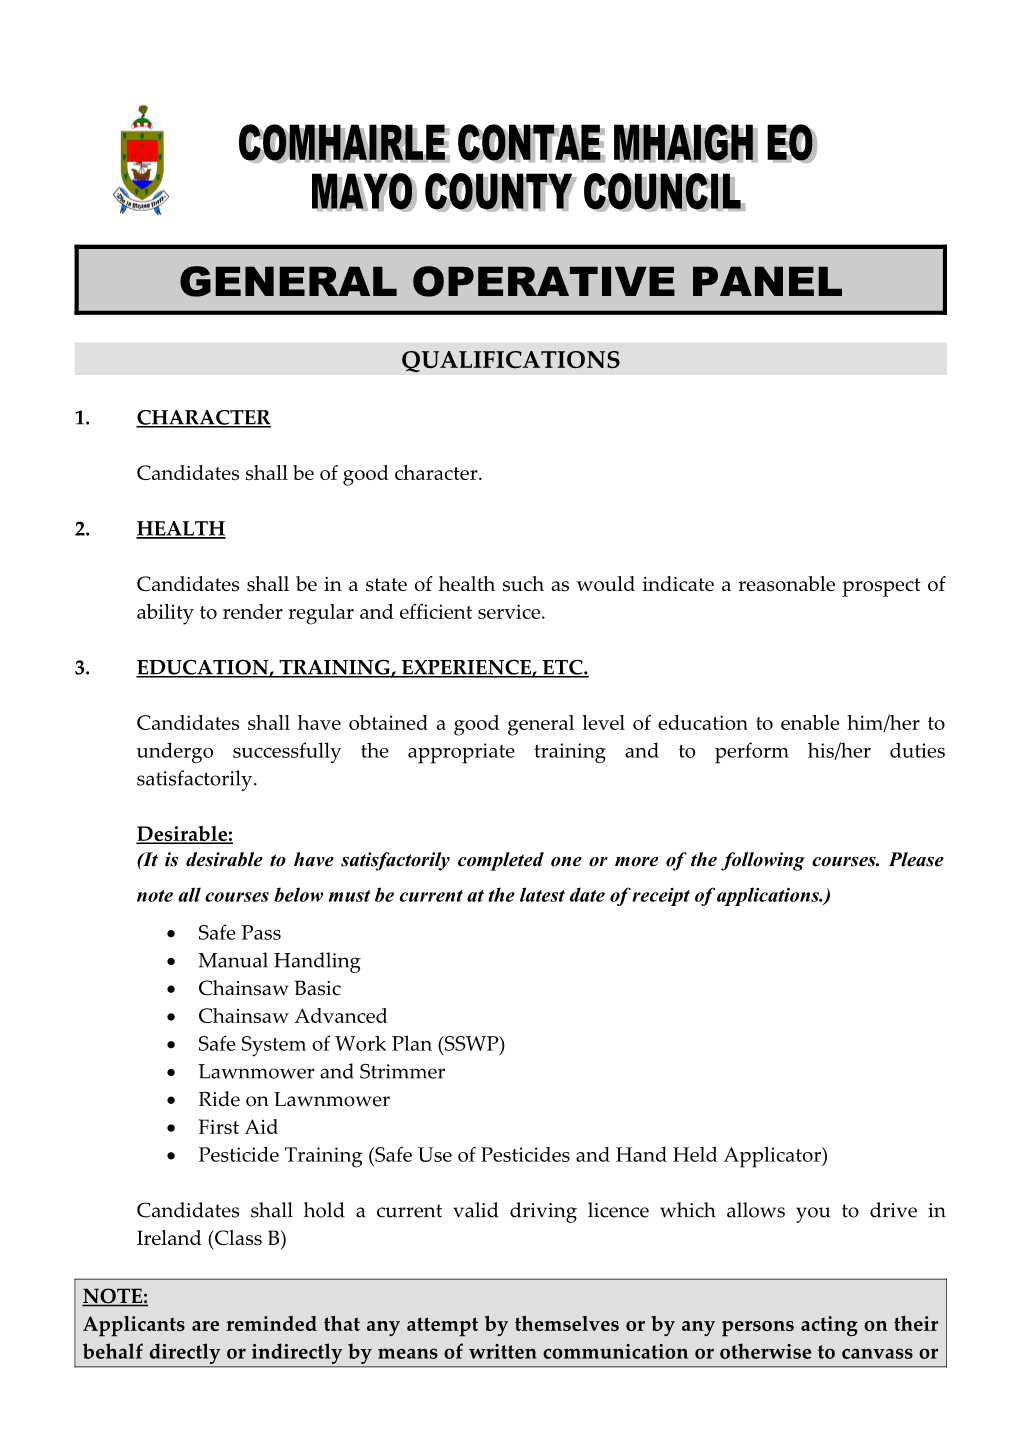 General Operative Panel